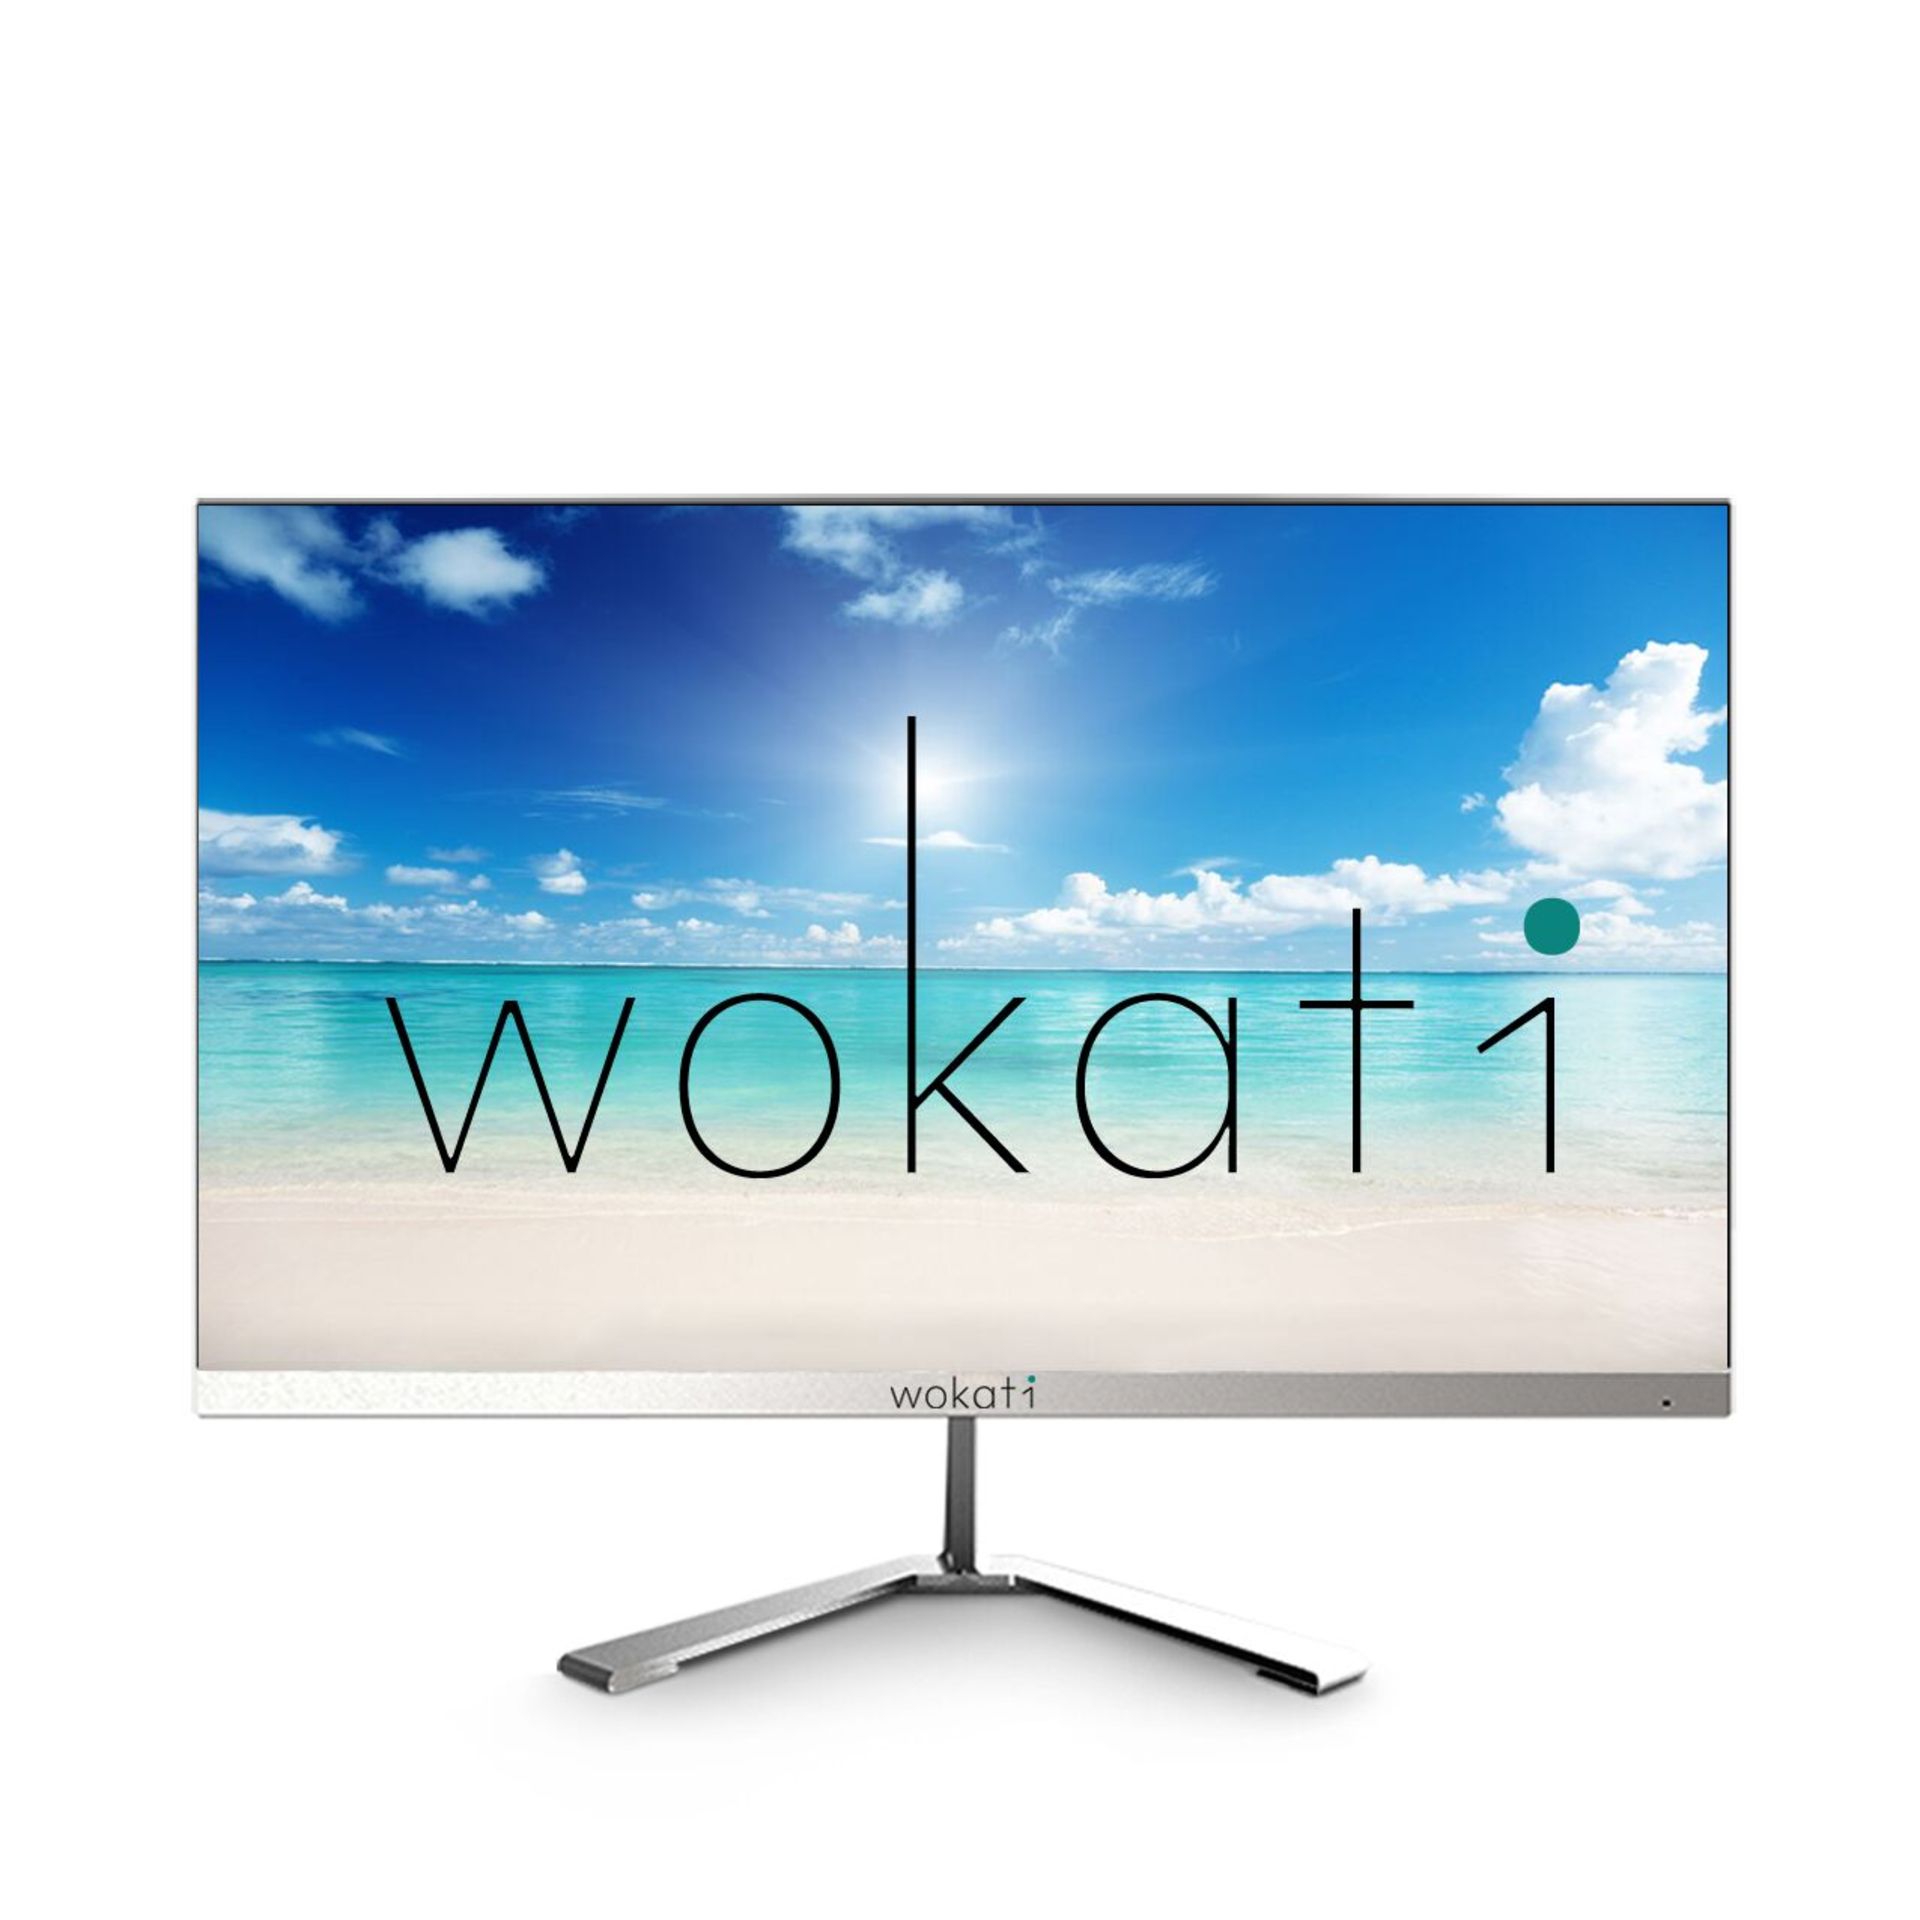 Off-site - 5x Wokati 24 inch monitors – unused and boxed - Image 4 of 6